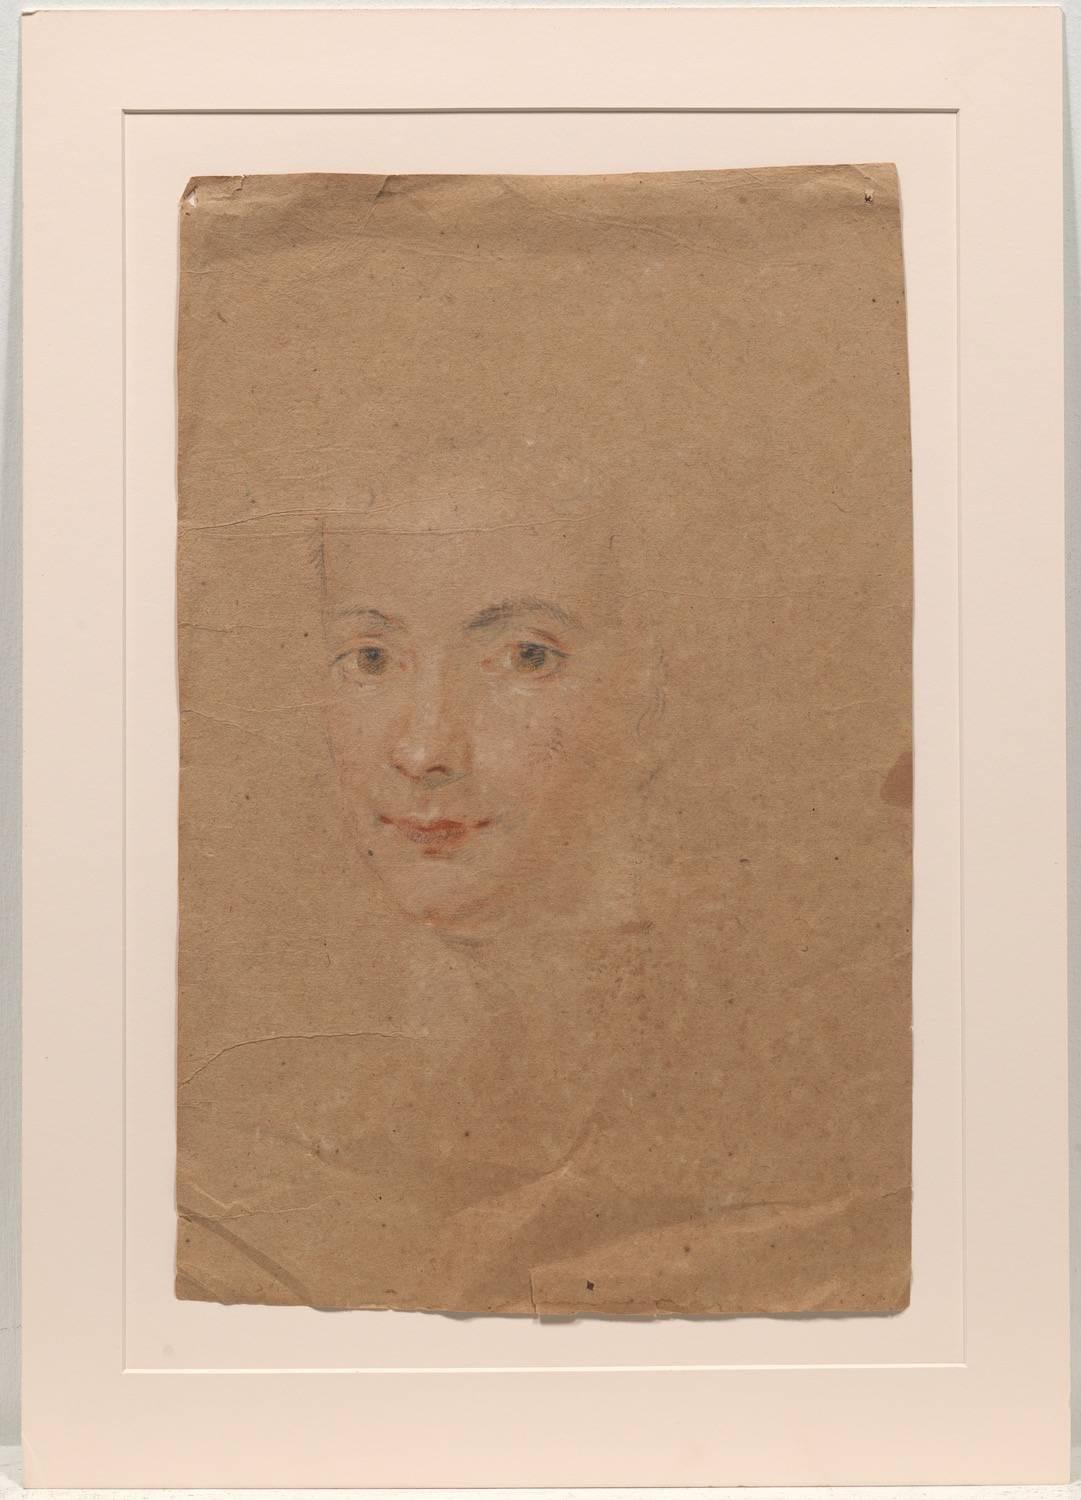 Portrait study of a woman, 18th century.